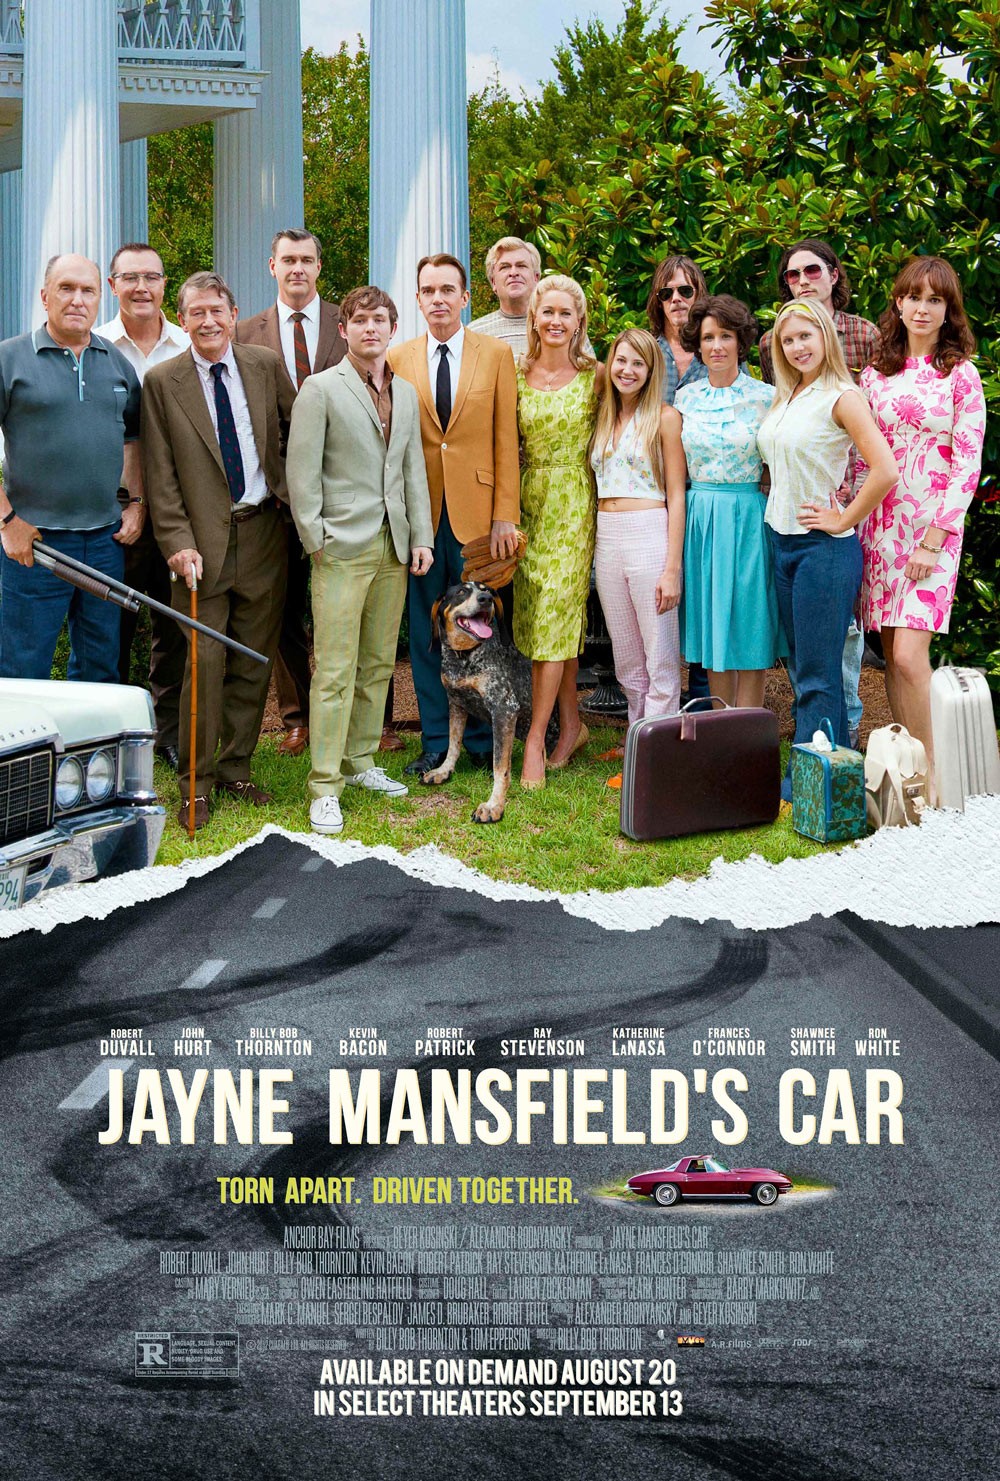 JAYNE MANSFIELD'S CAR TRAILER